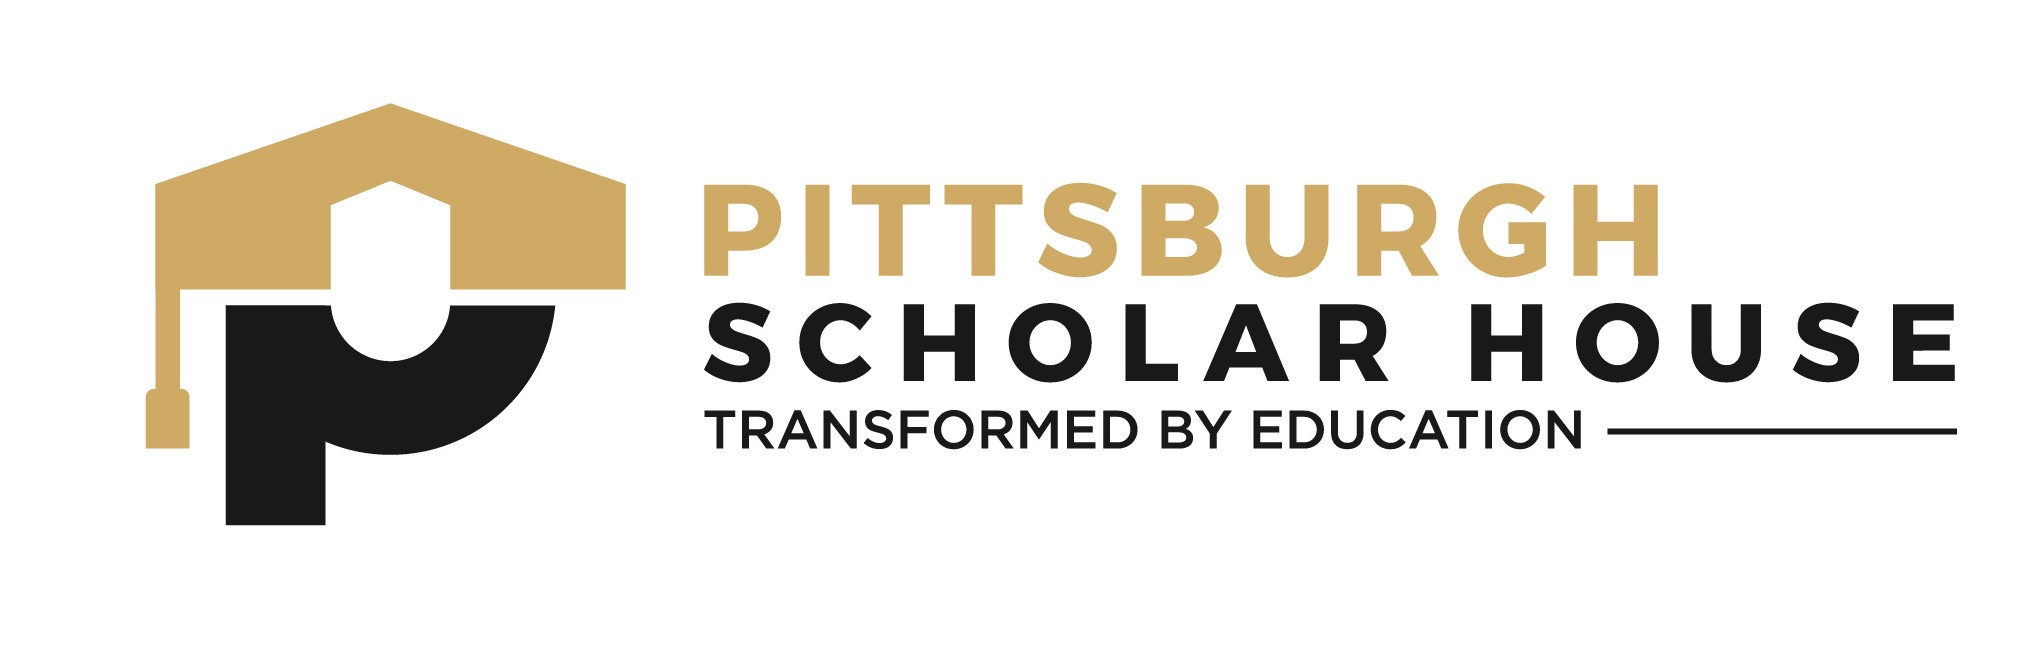 Pittsburgh Scholar House logo